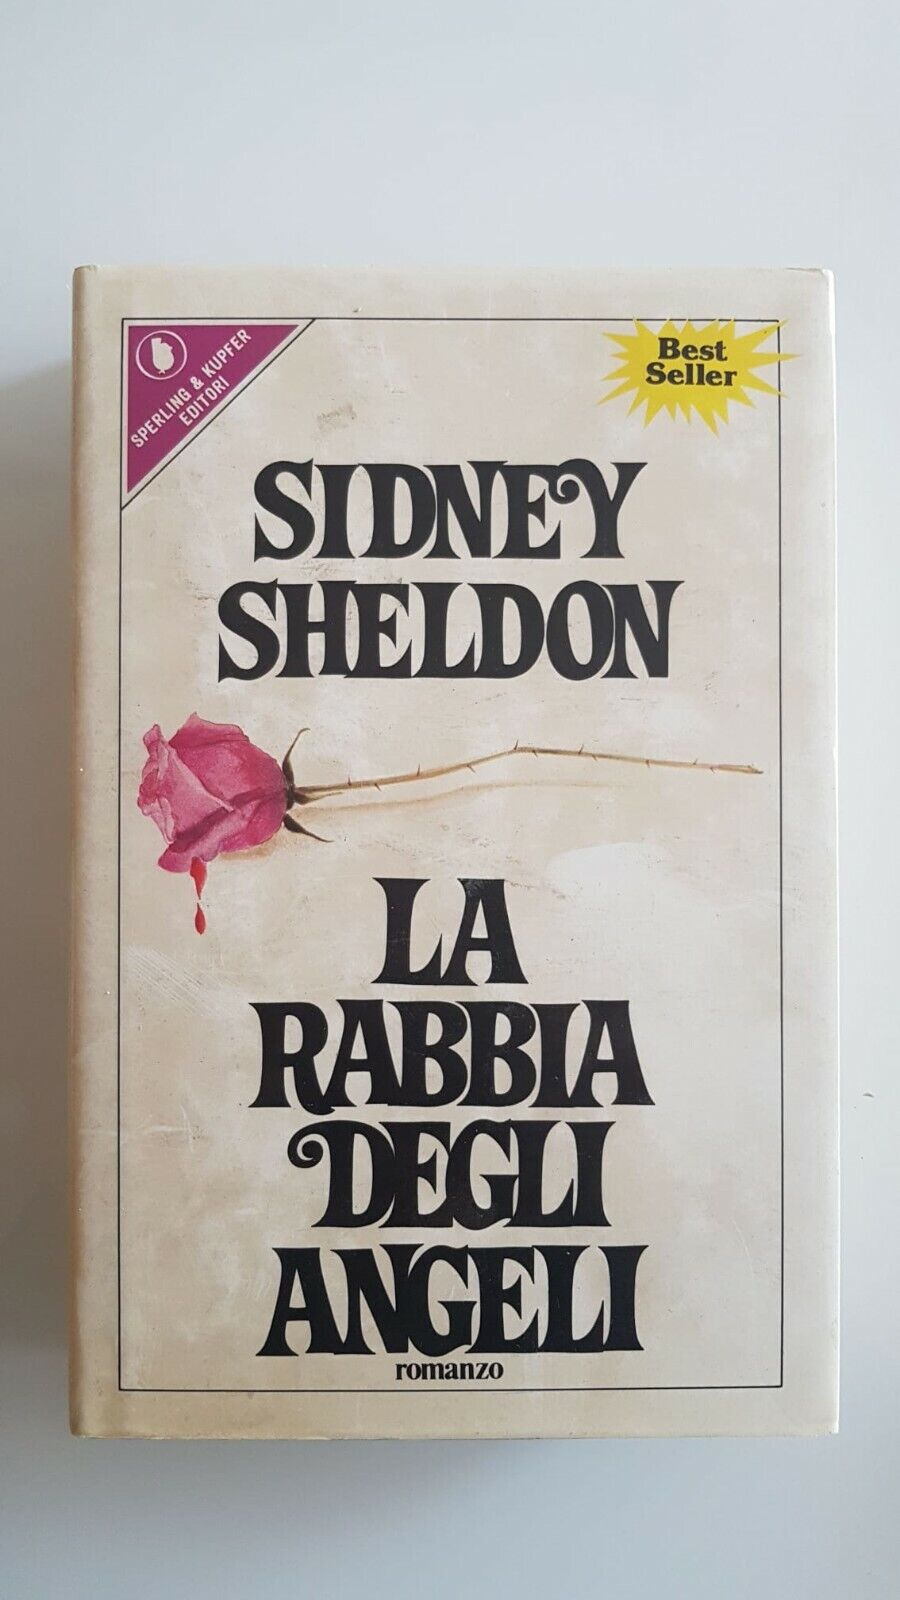 Sidney Sheldon - stock di 4 romanzi